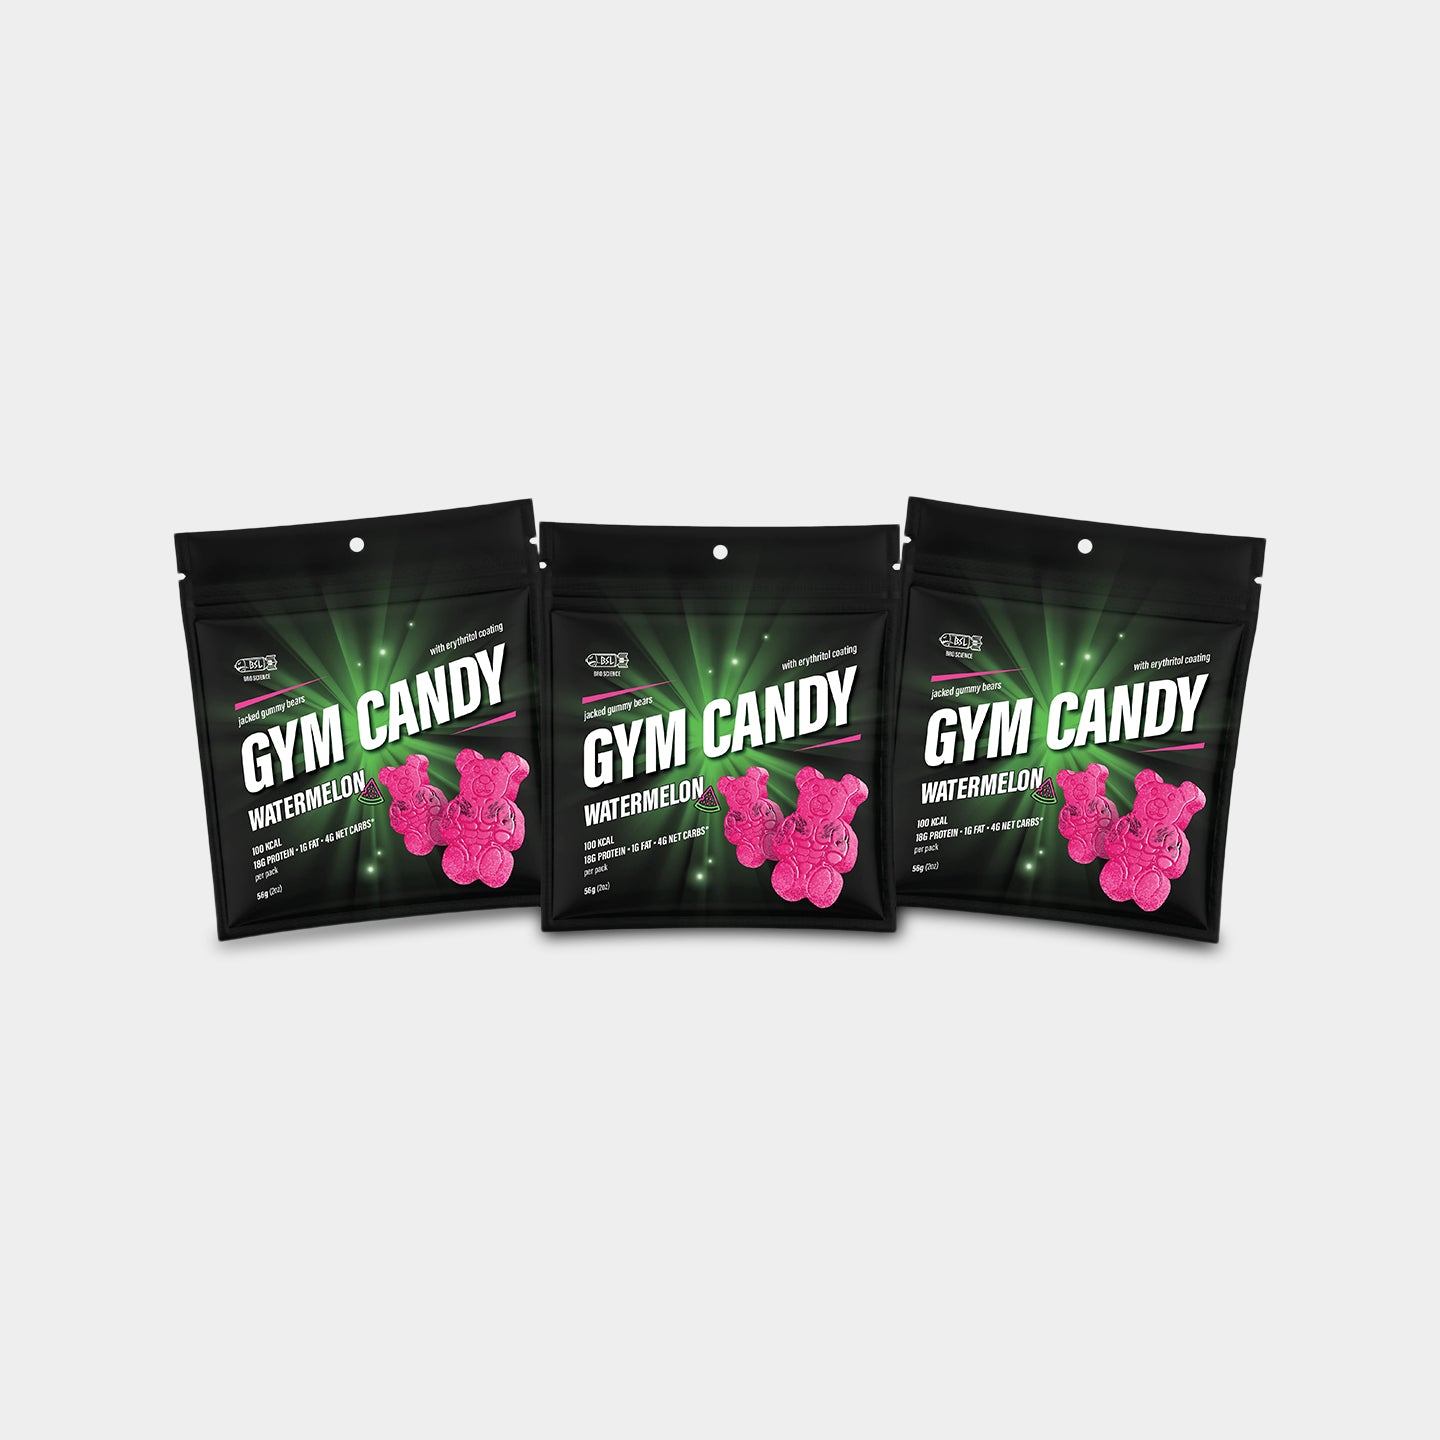 Gym Candy Jacked Gummy Bears, Watermelon, 2oz - 9 Pack A1